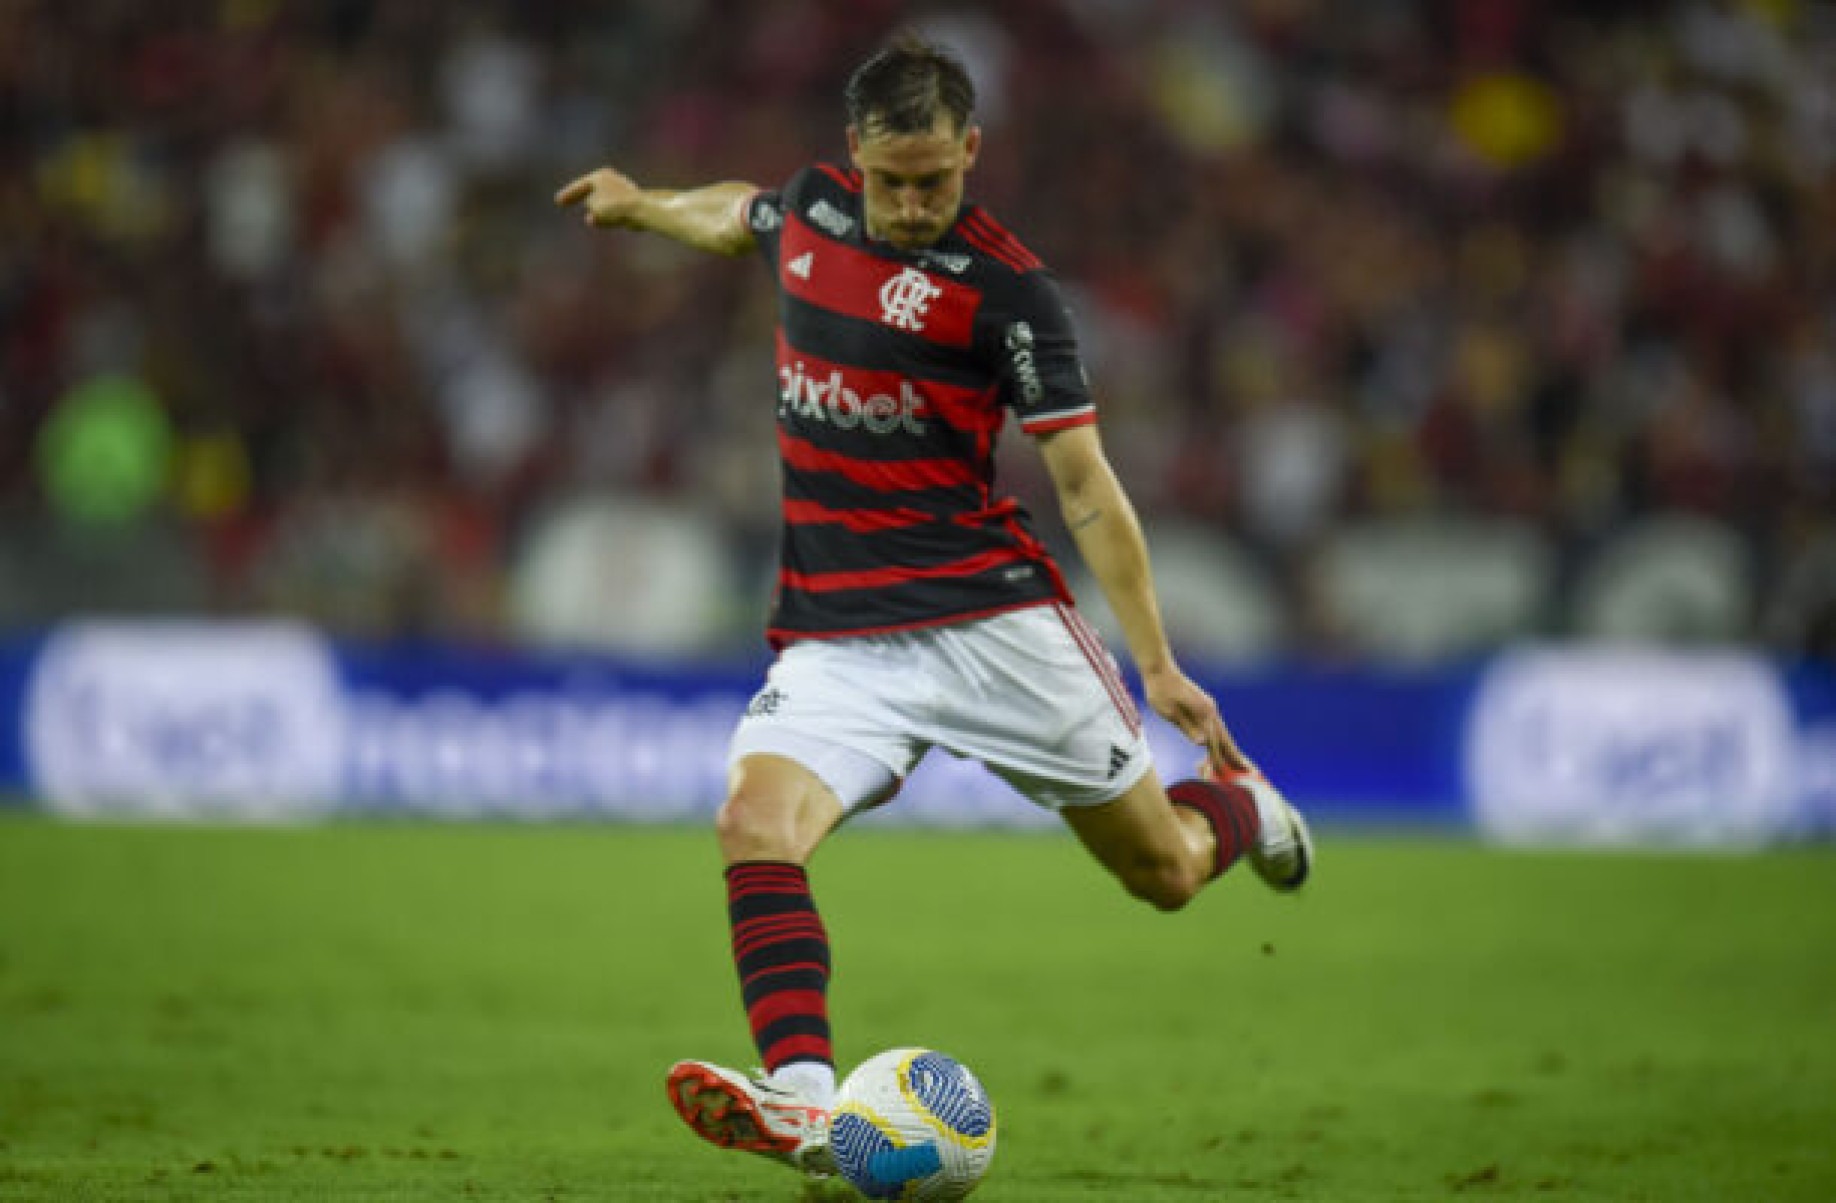 Viña disputa primeiro clássico como titular e ganha moral no Flamengo